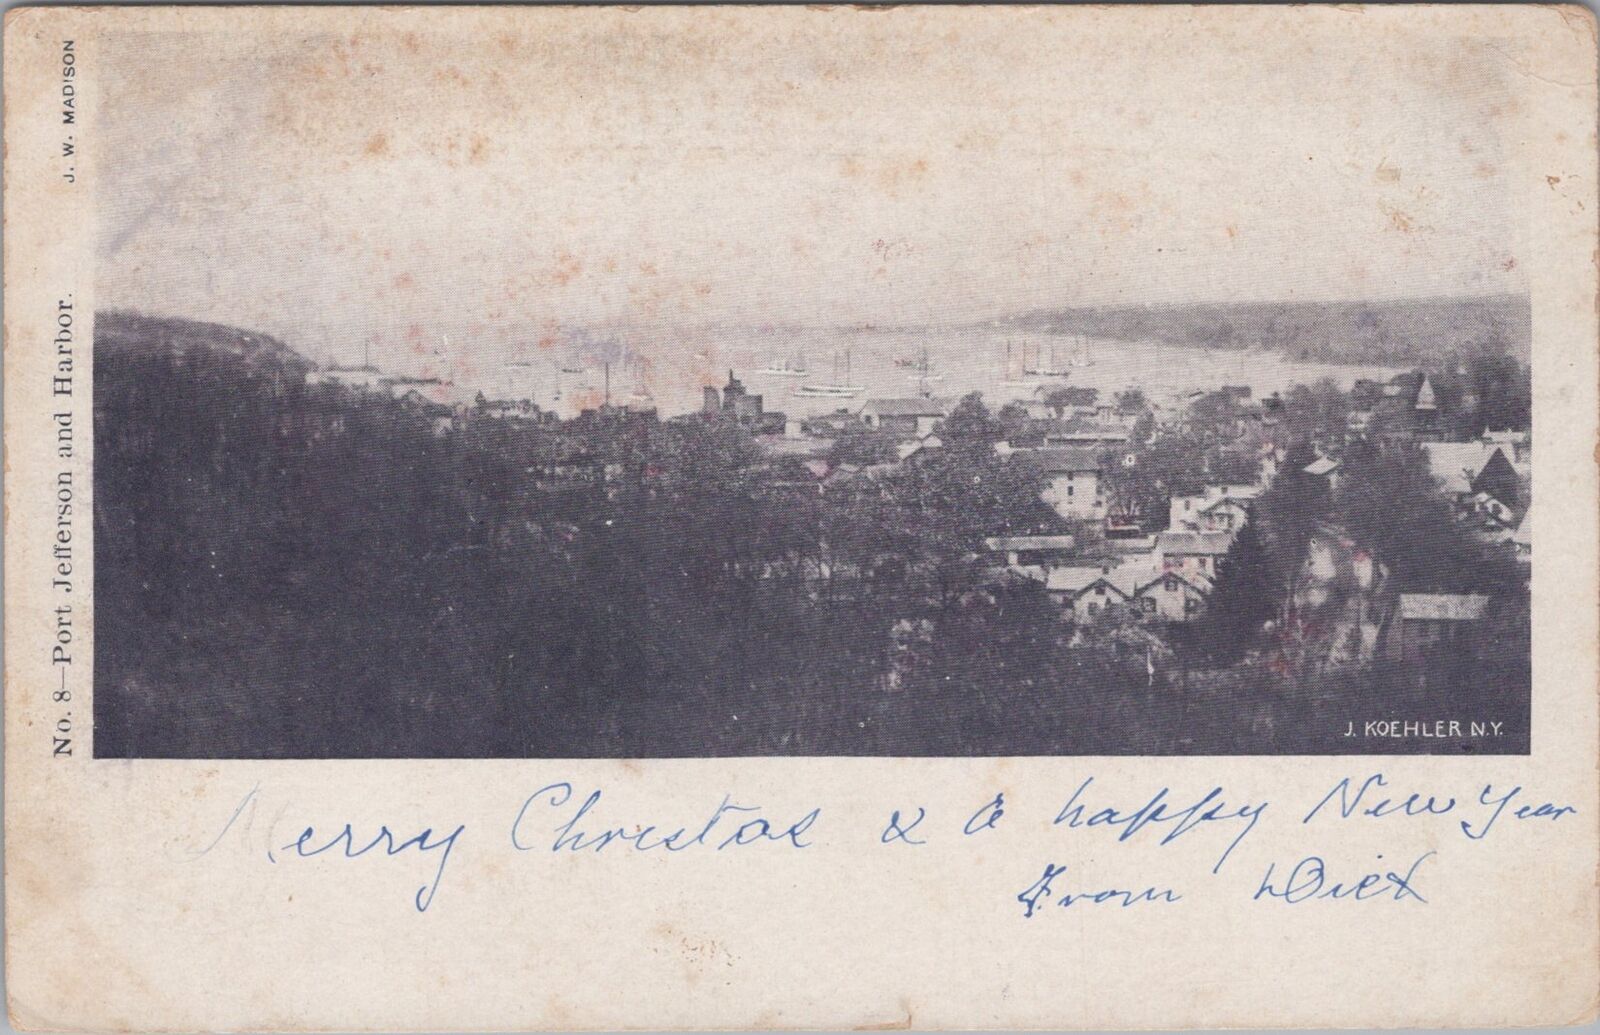 Port Jefferson and Harbor New York 1906 Postcard